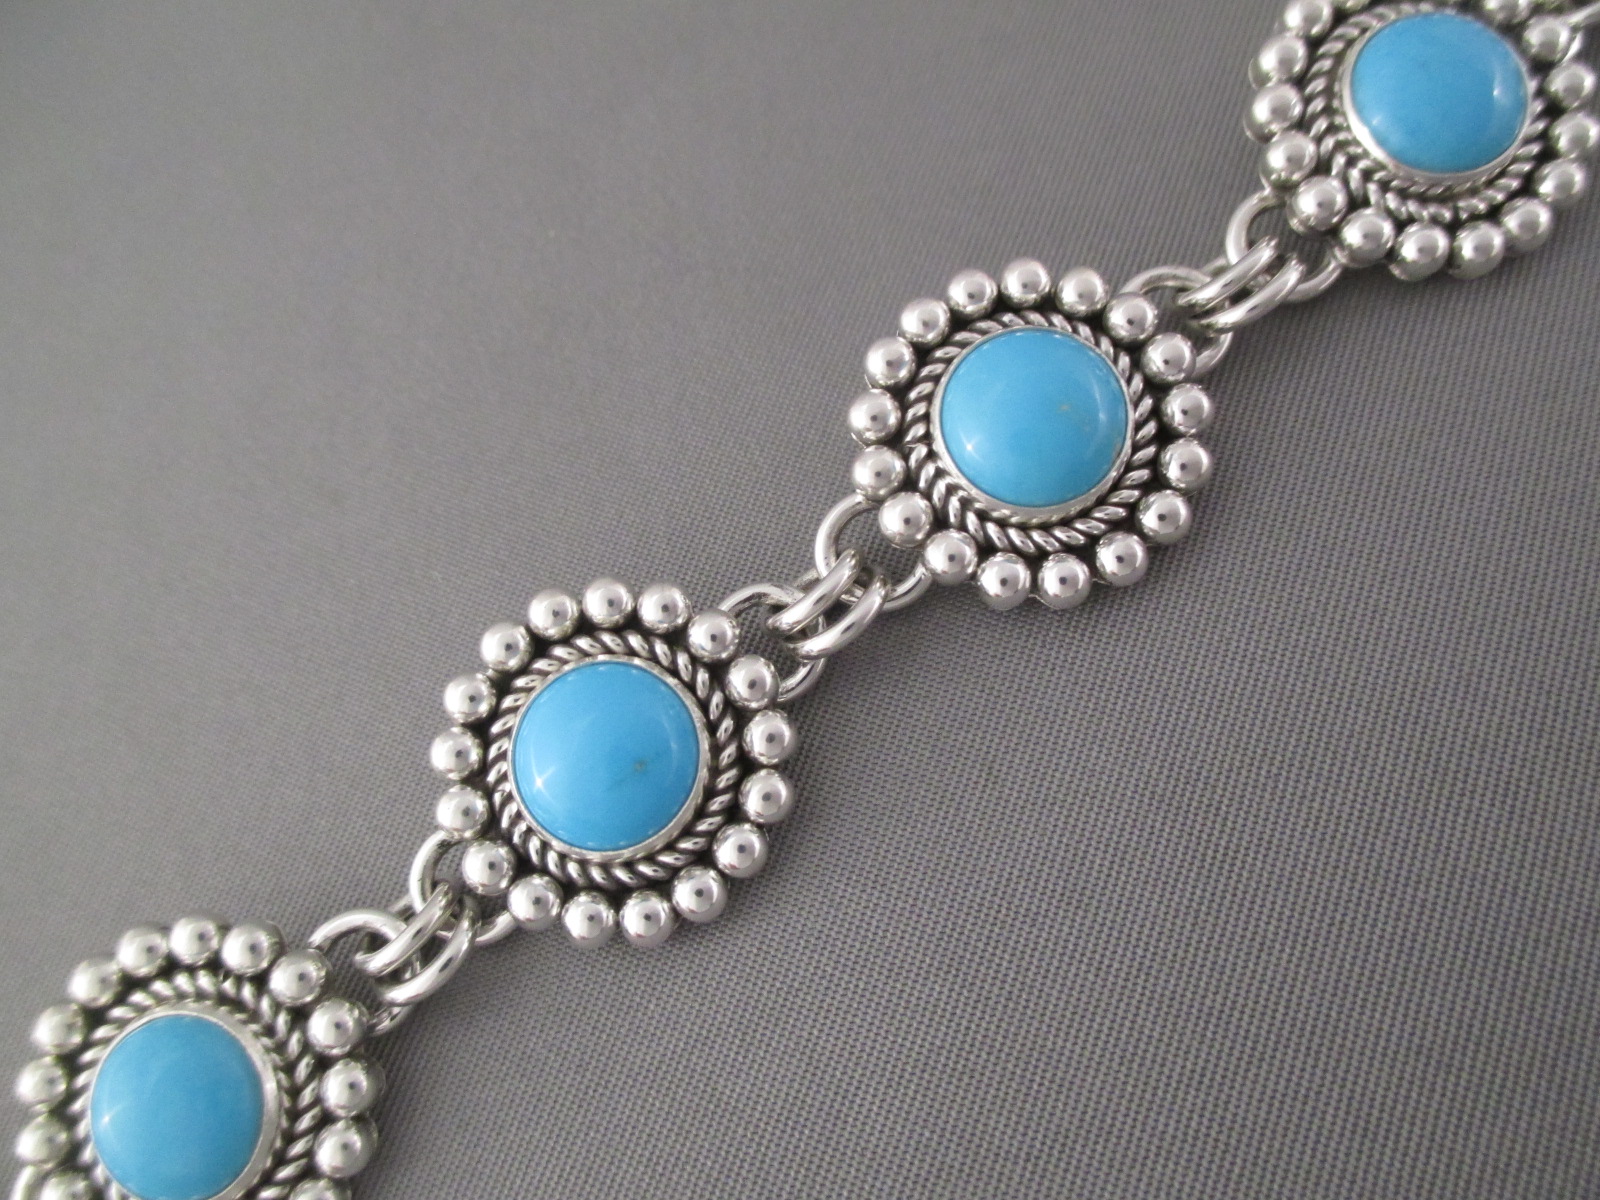 Sleeping Beauty Turquoise Link Bracelet by Native American Jewelry artist, Artie Yellowhorse $595-